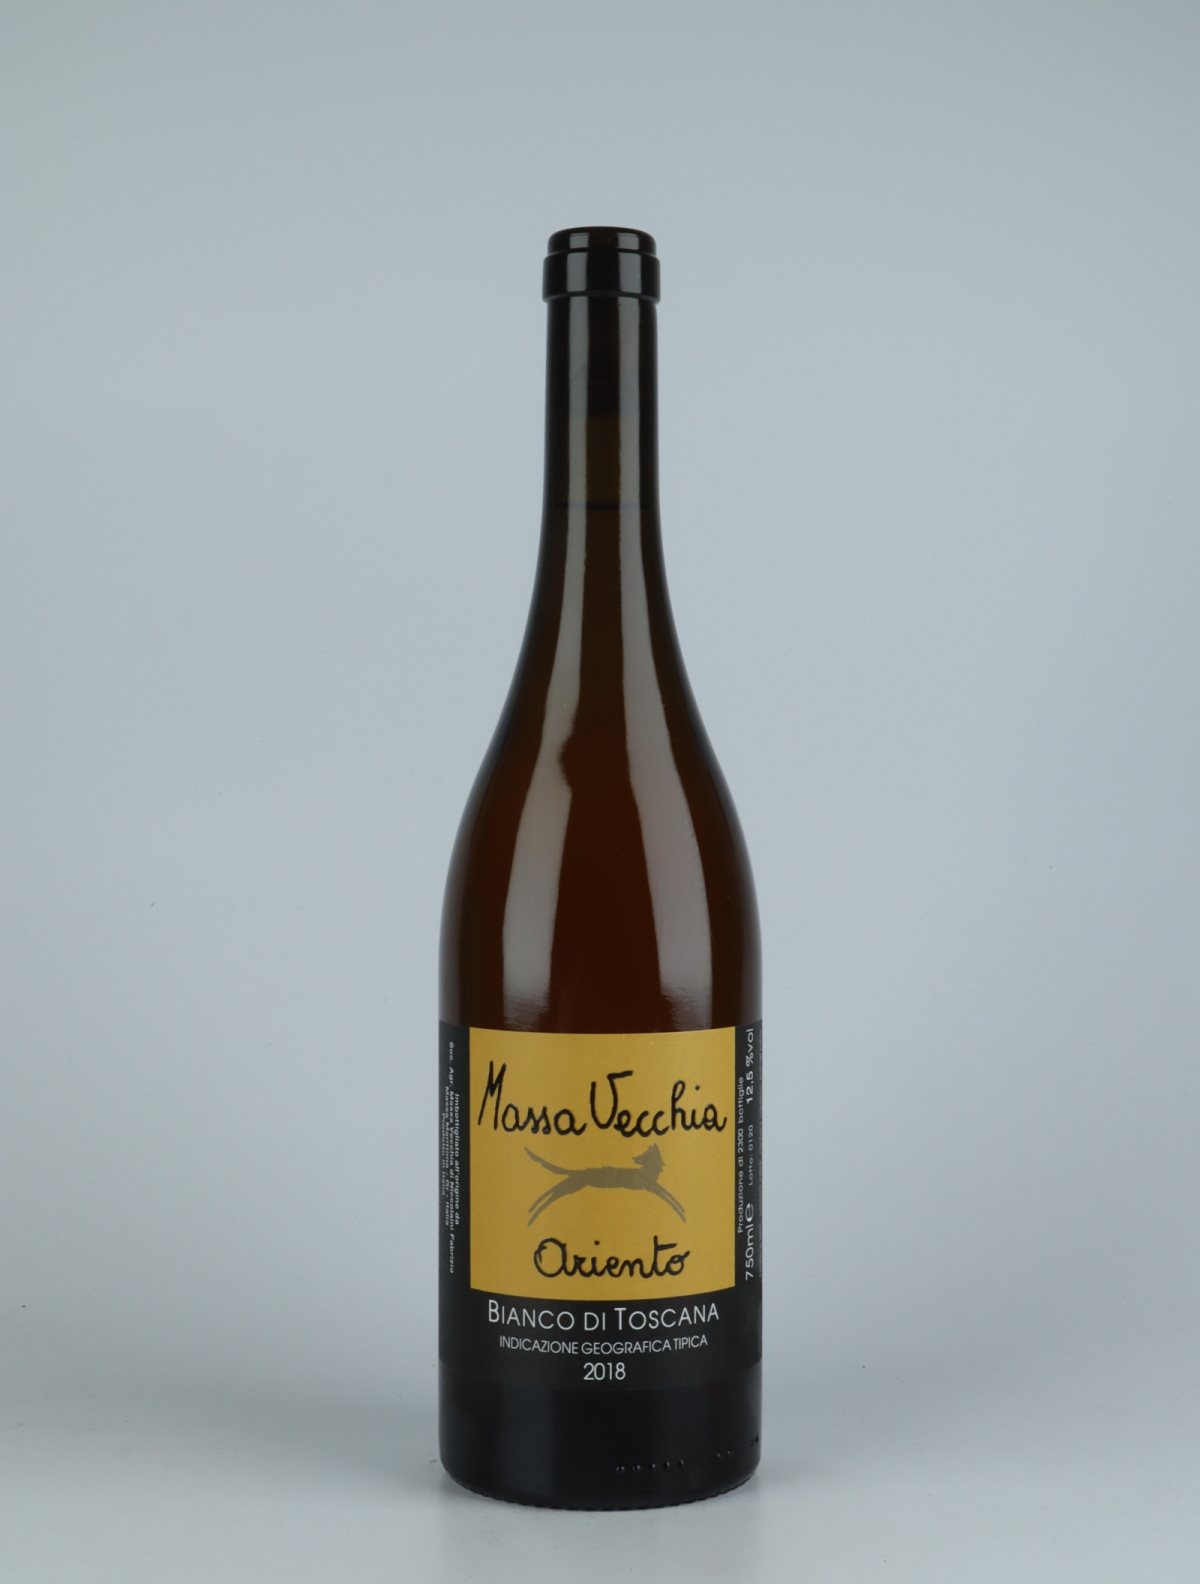 A bottle 2018 Ariento White wine from Massa Vecchia, Tuscany in Italy